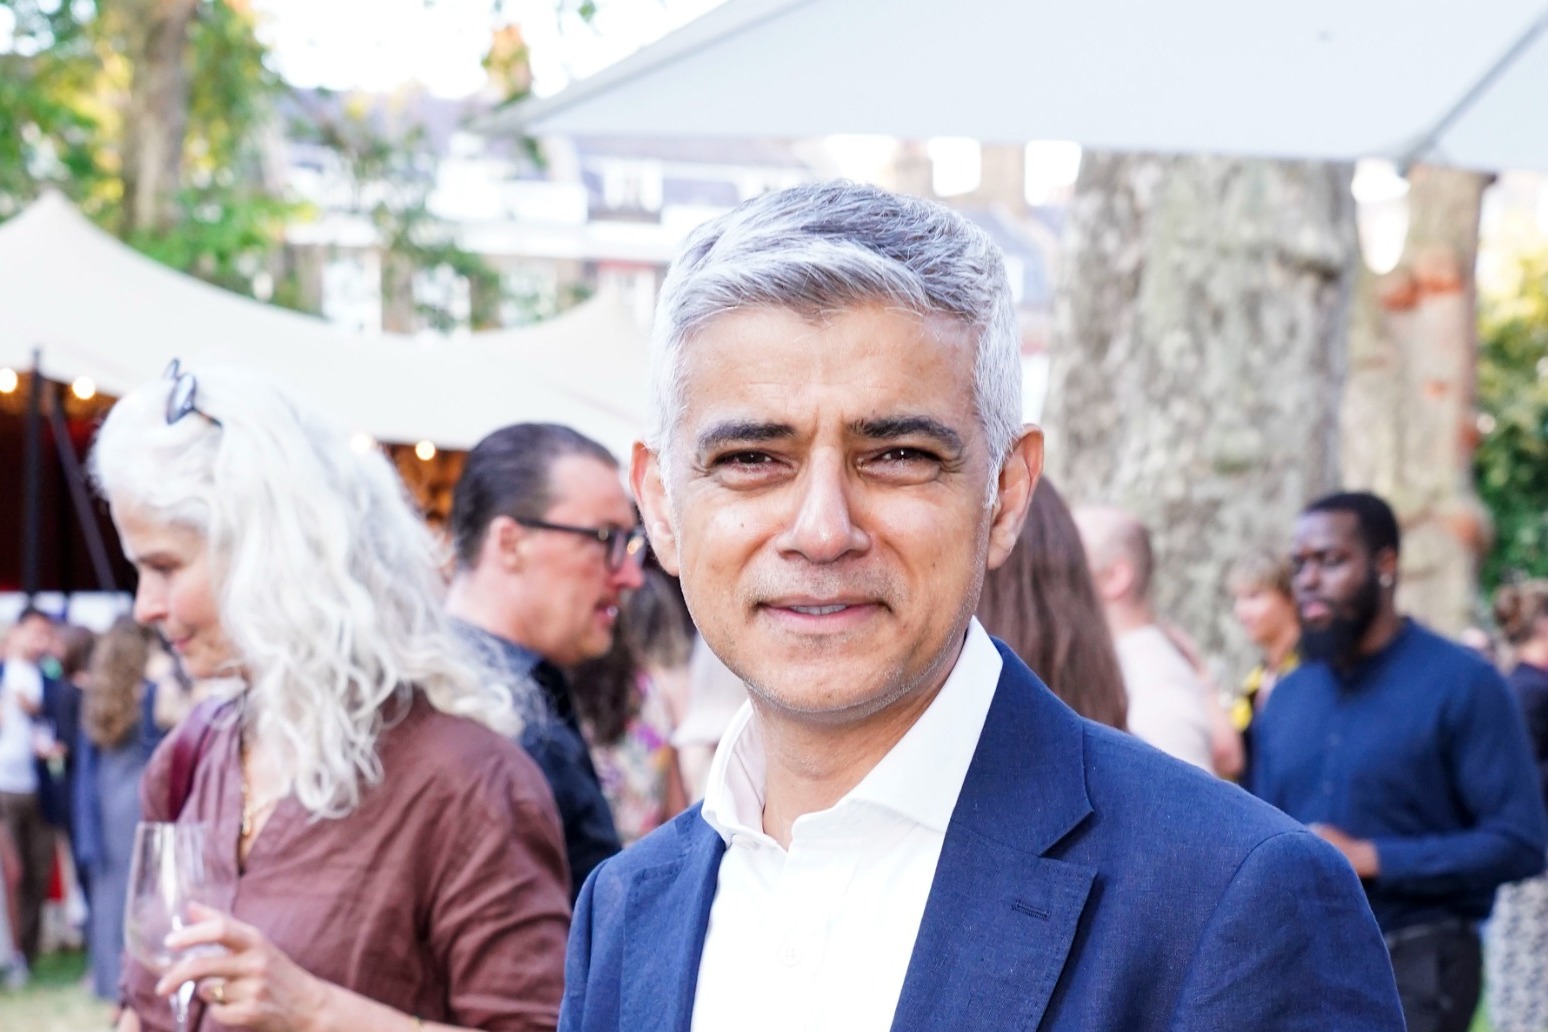 London mayor warns terror threat ‘still very real’ on Finsbury Park anniversary 